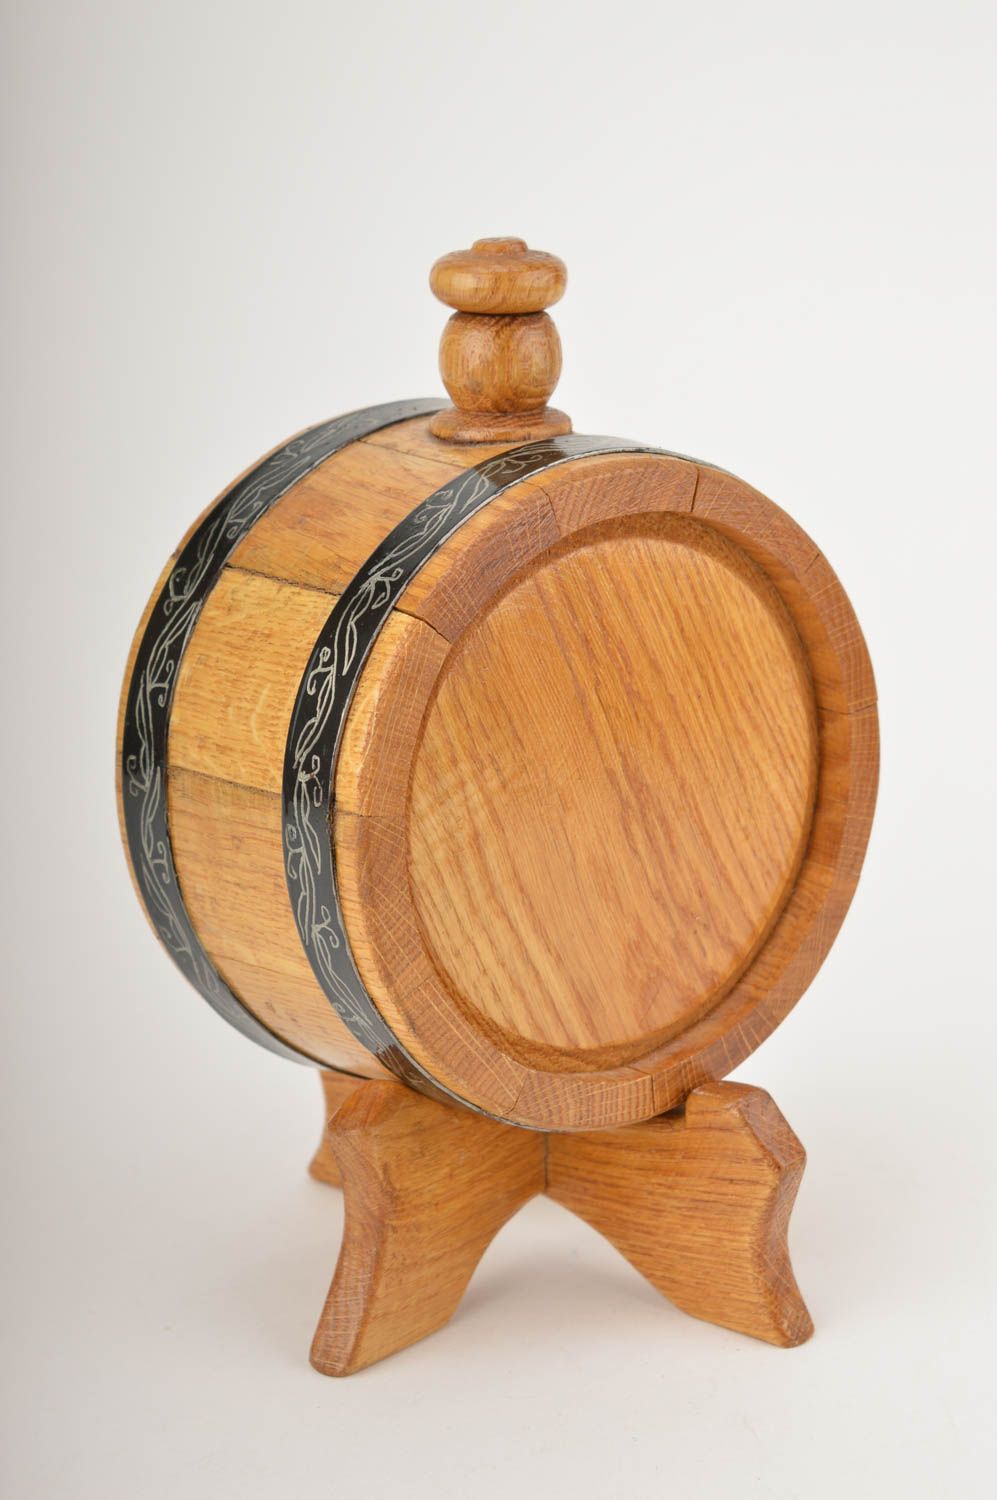 Handmade wooden barrel wine barrel wood decor interior barrel present for fiend photo 3